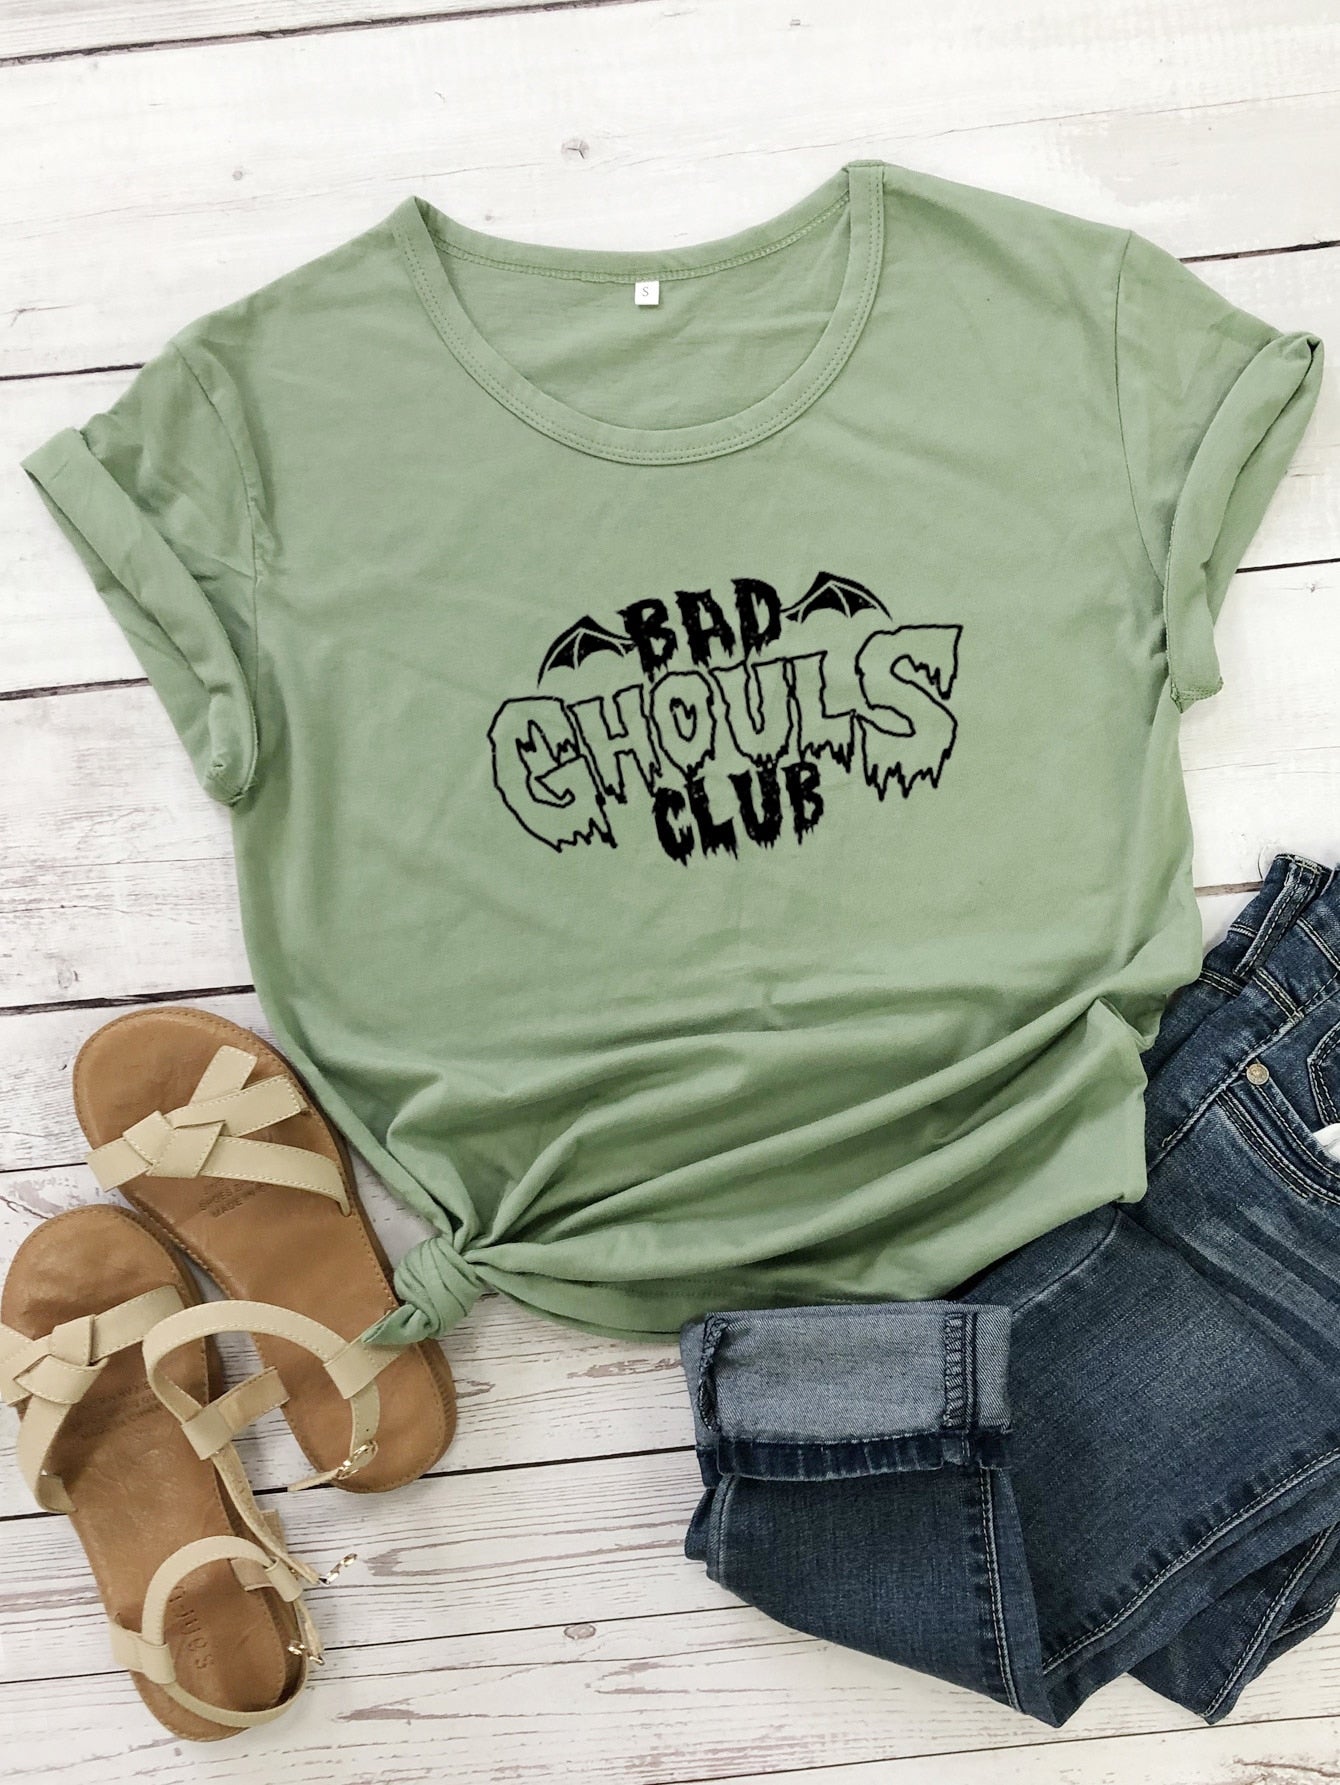 Bad Ghouls Club T-shirt